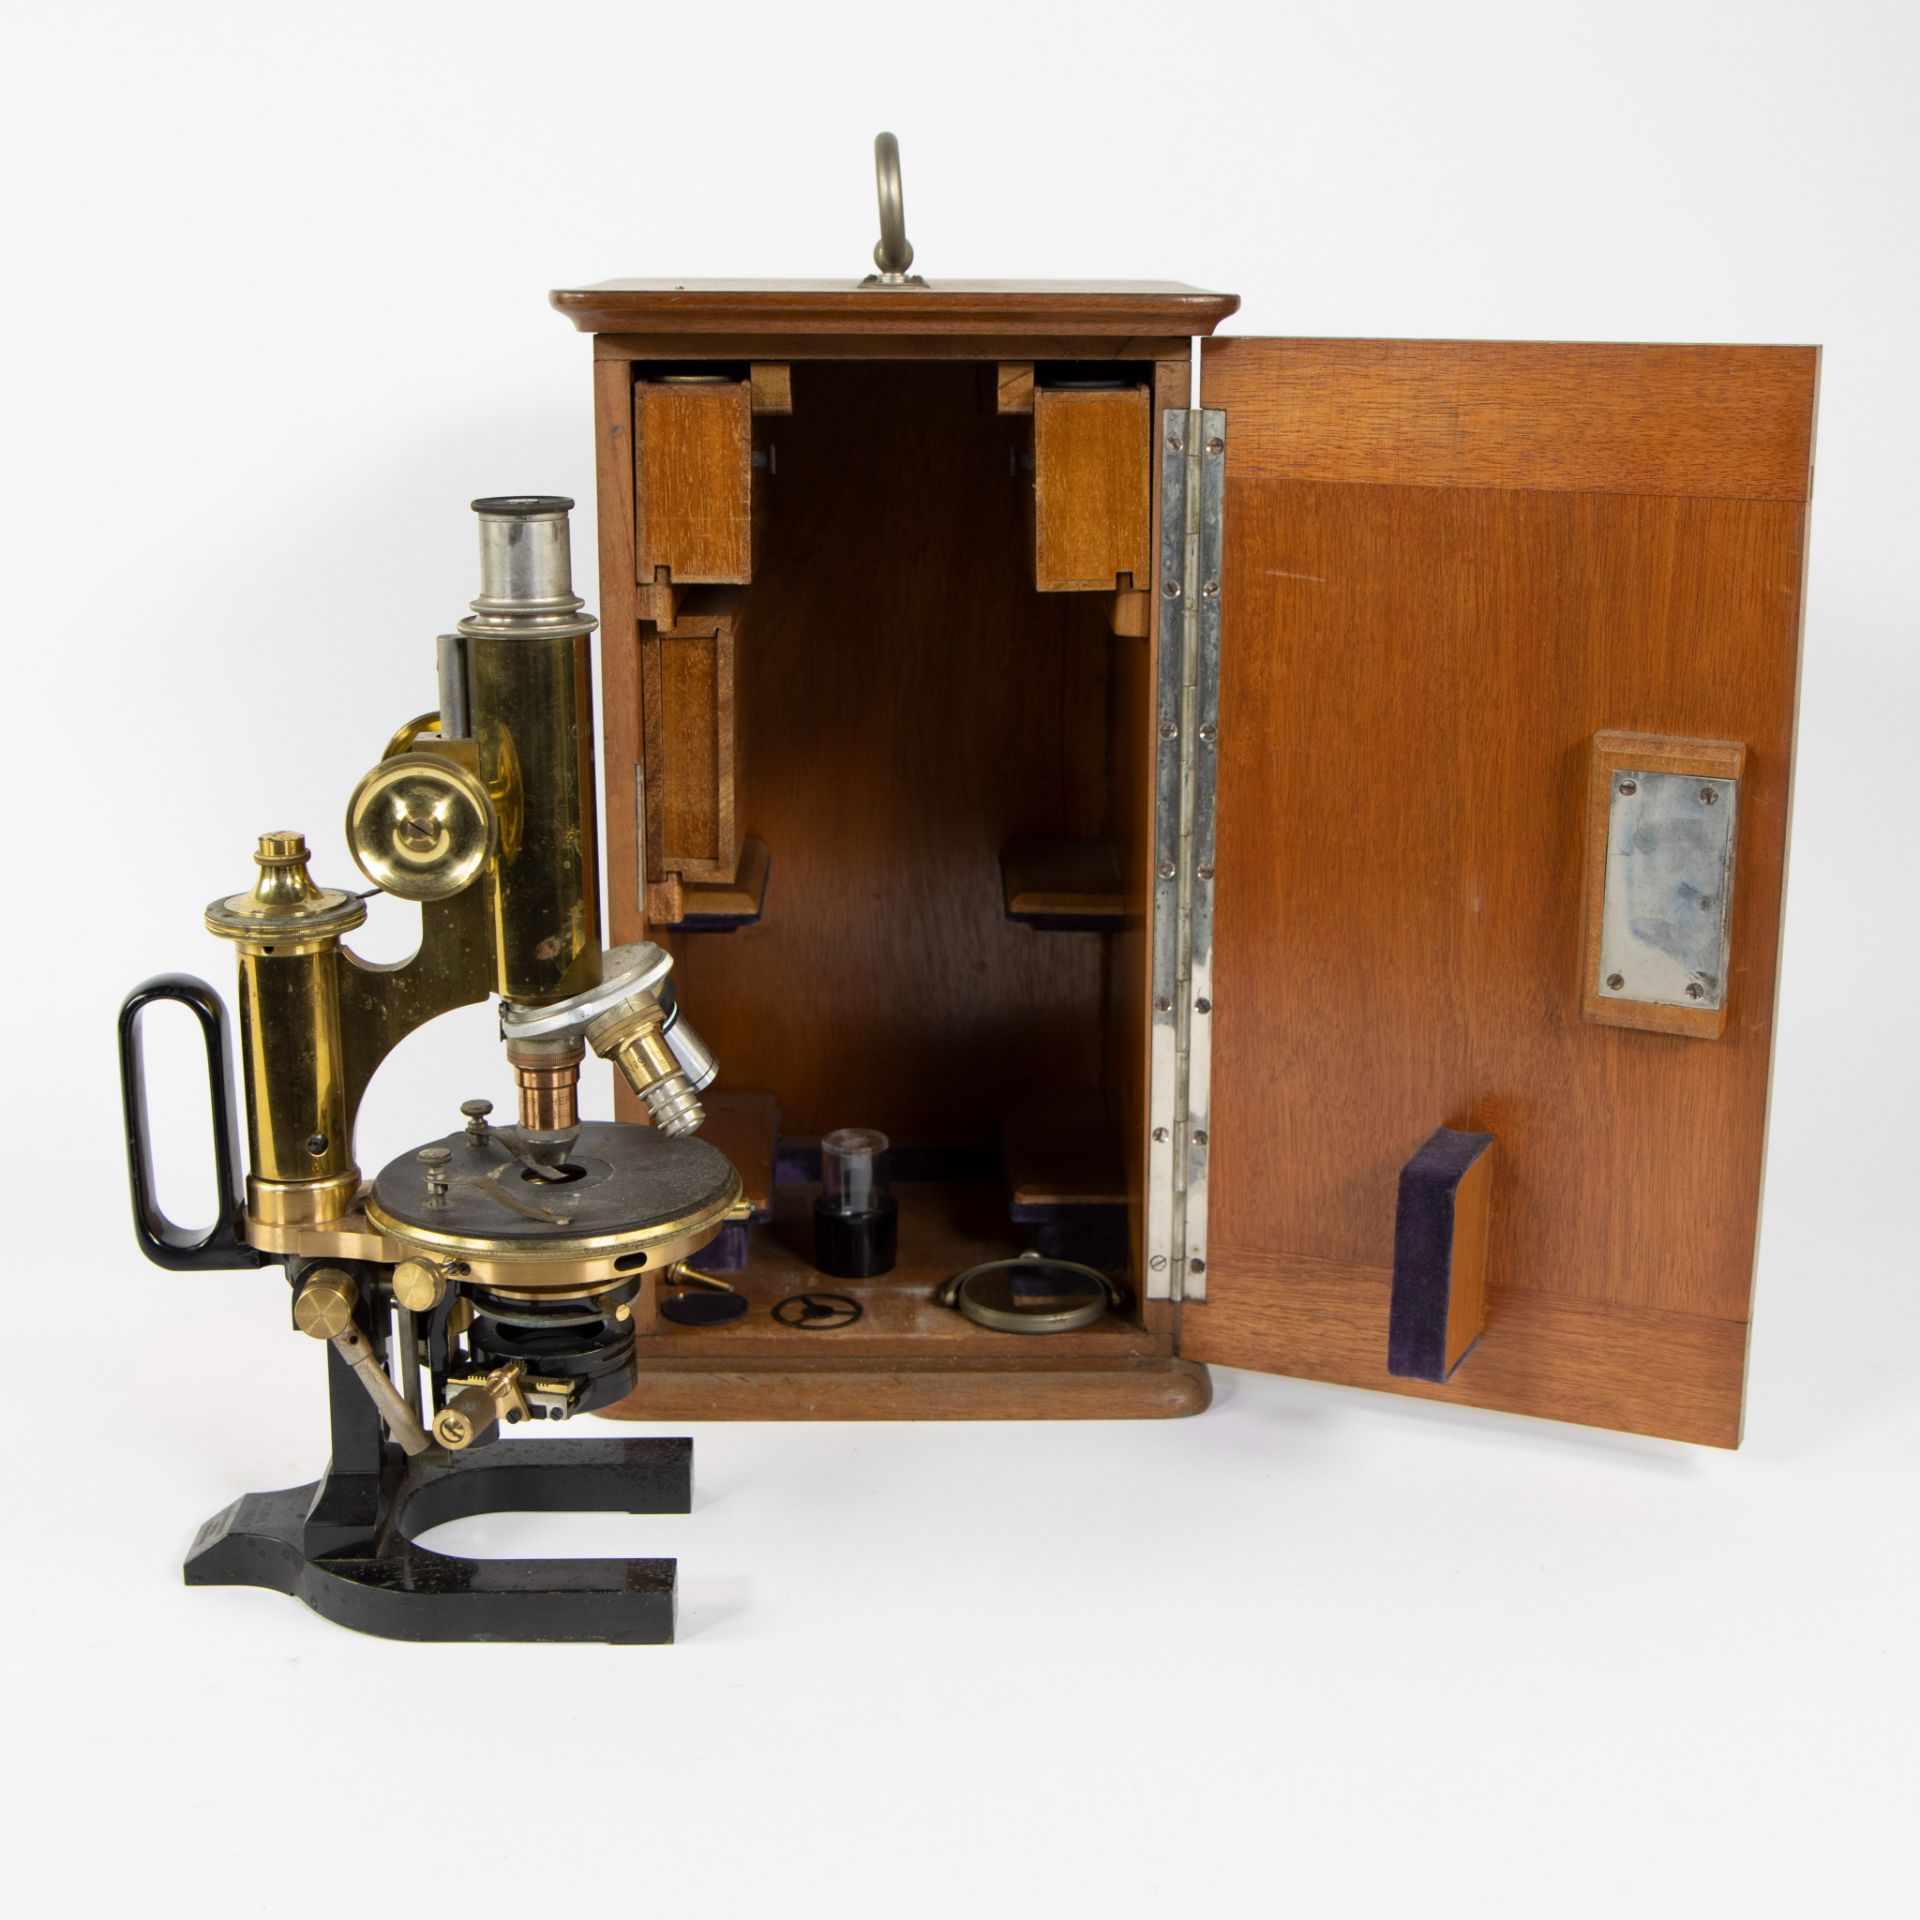 Microscope C. Reichert Wien n° 246019, DRGM in original wooden case, marked